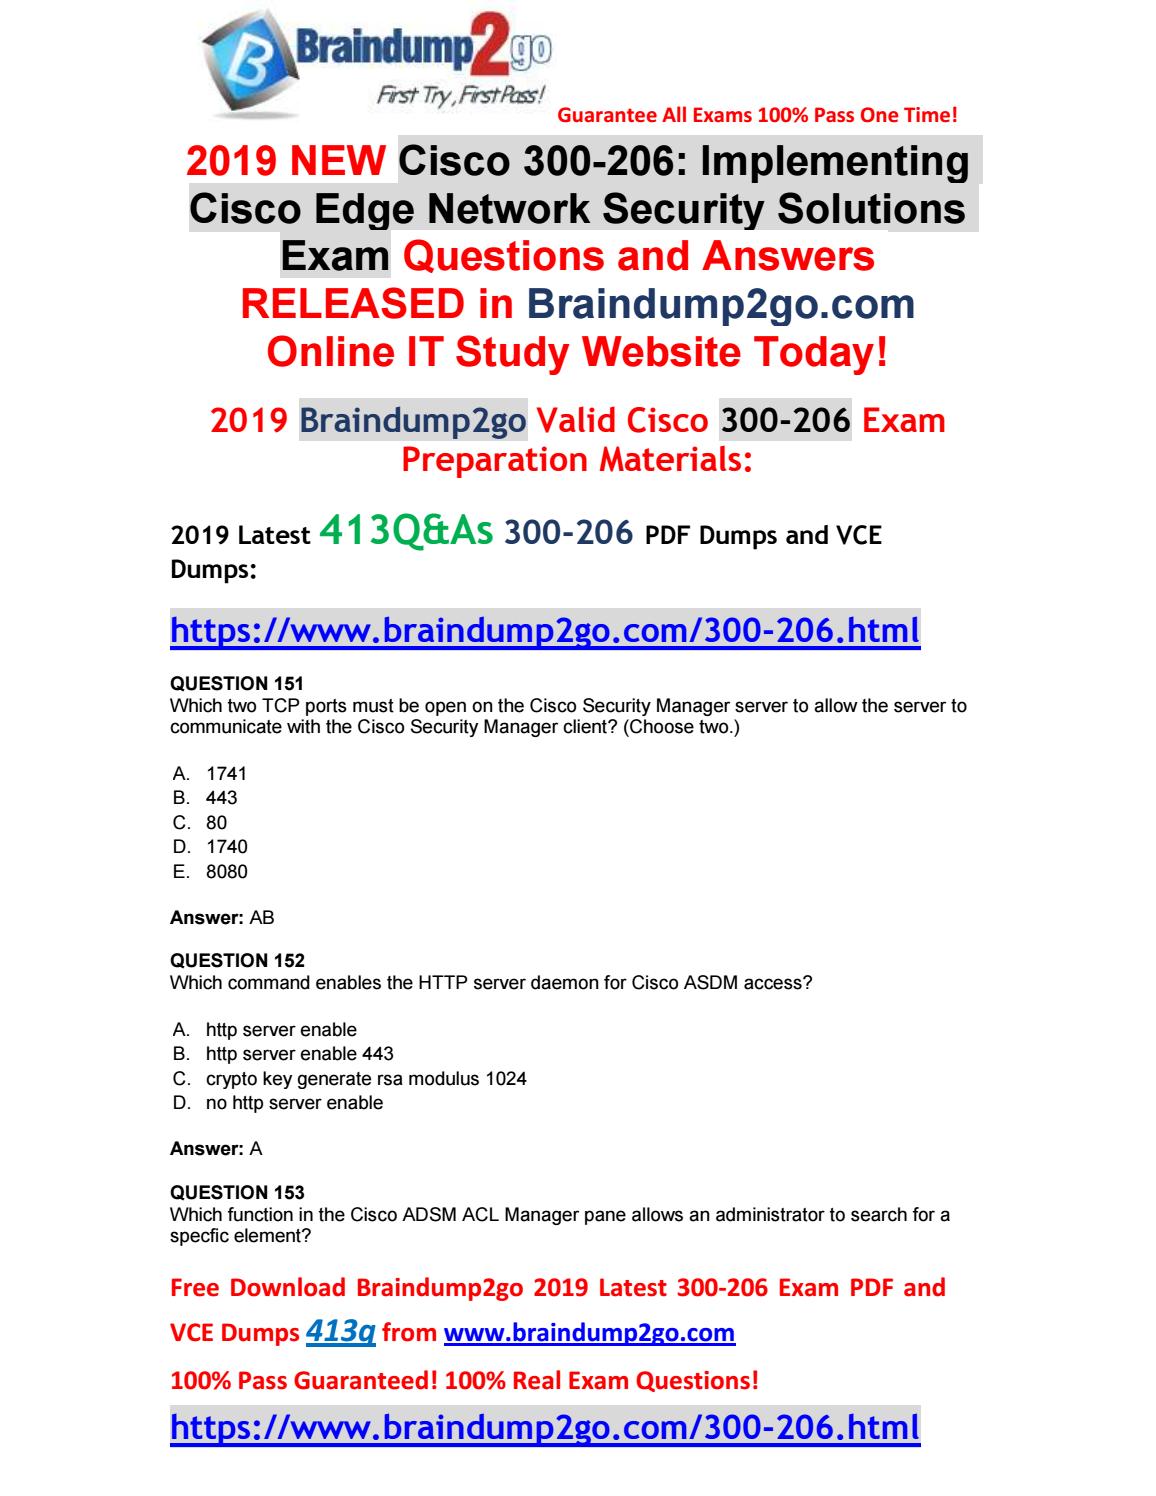 Cisco switch generate rsa key